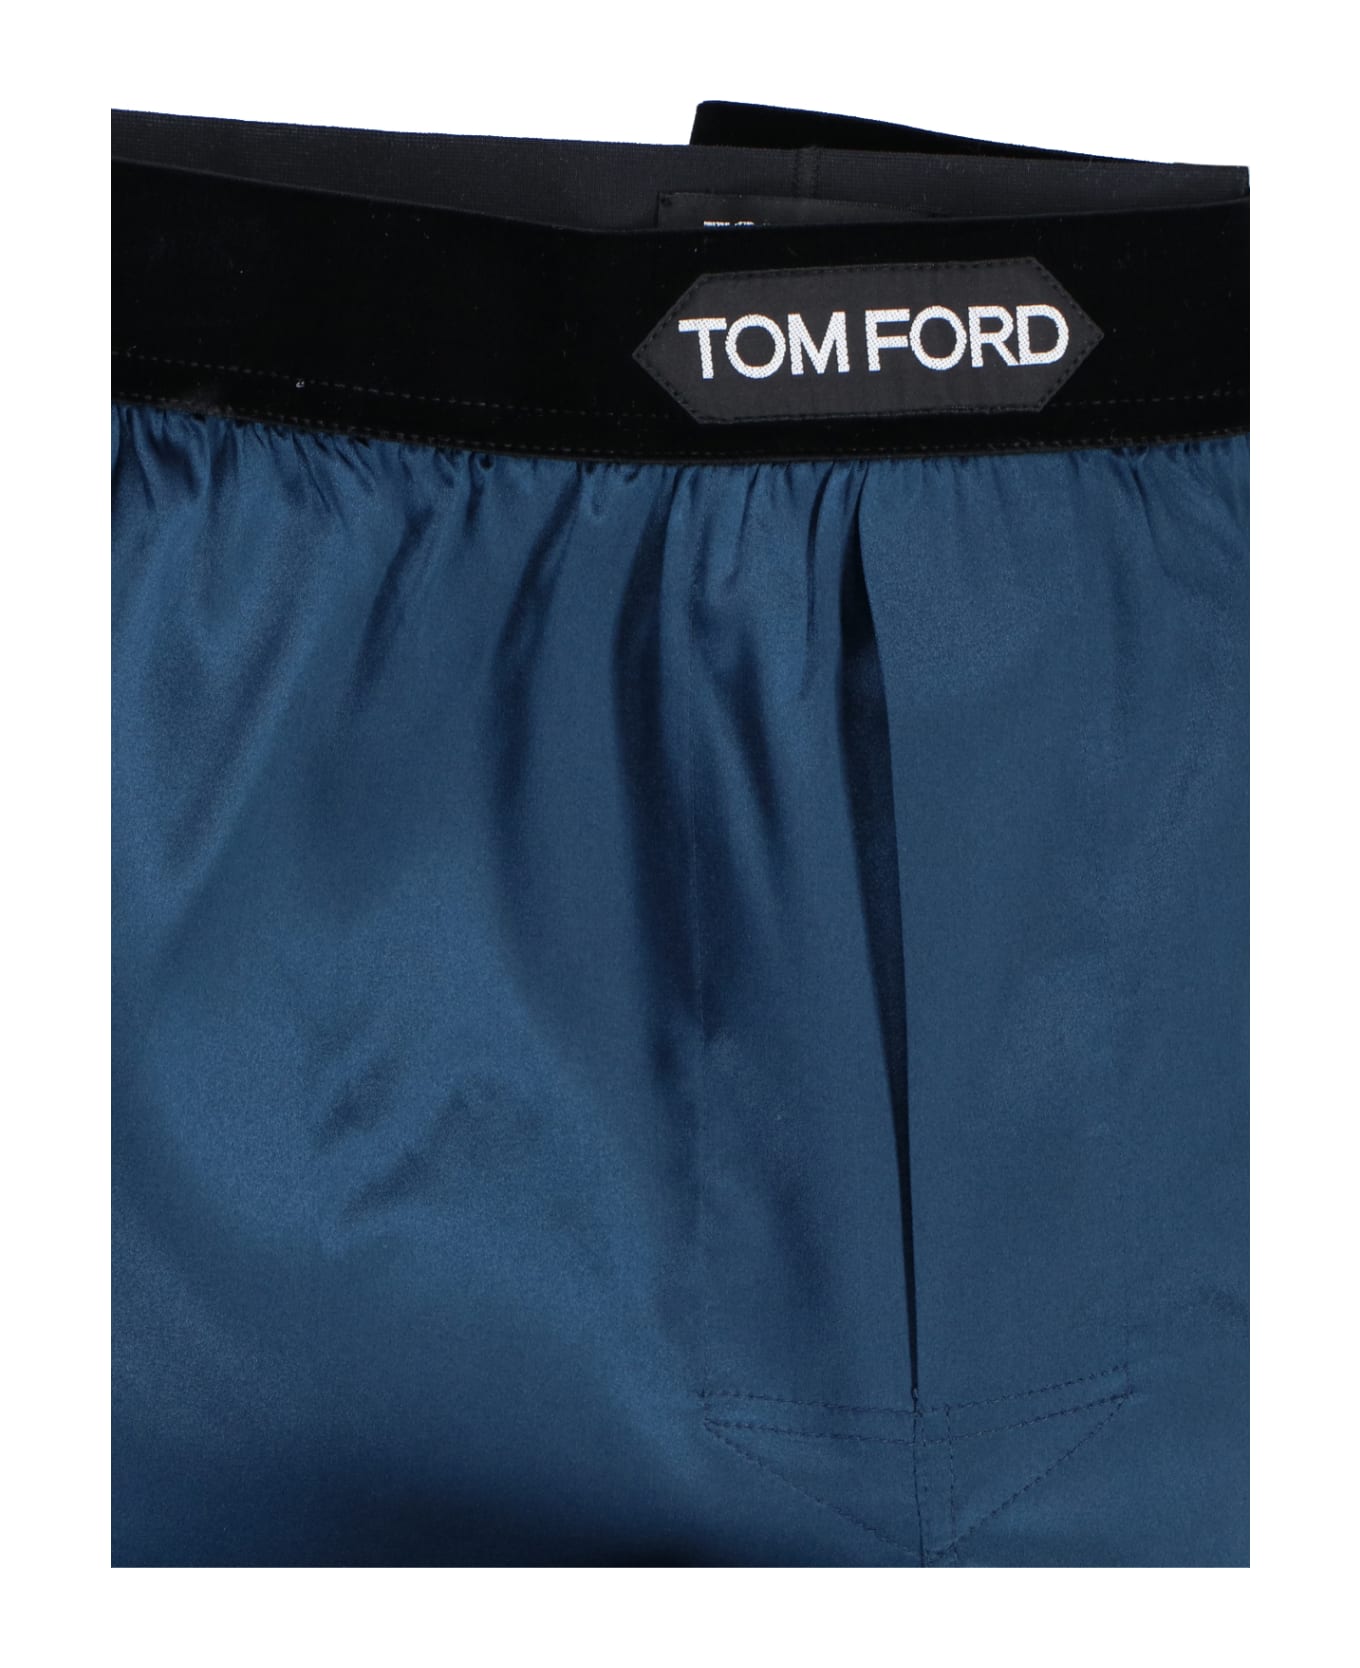 Tom Ford Logo Boxer Shorts - Blue